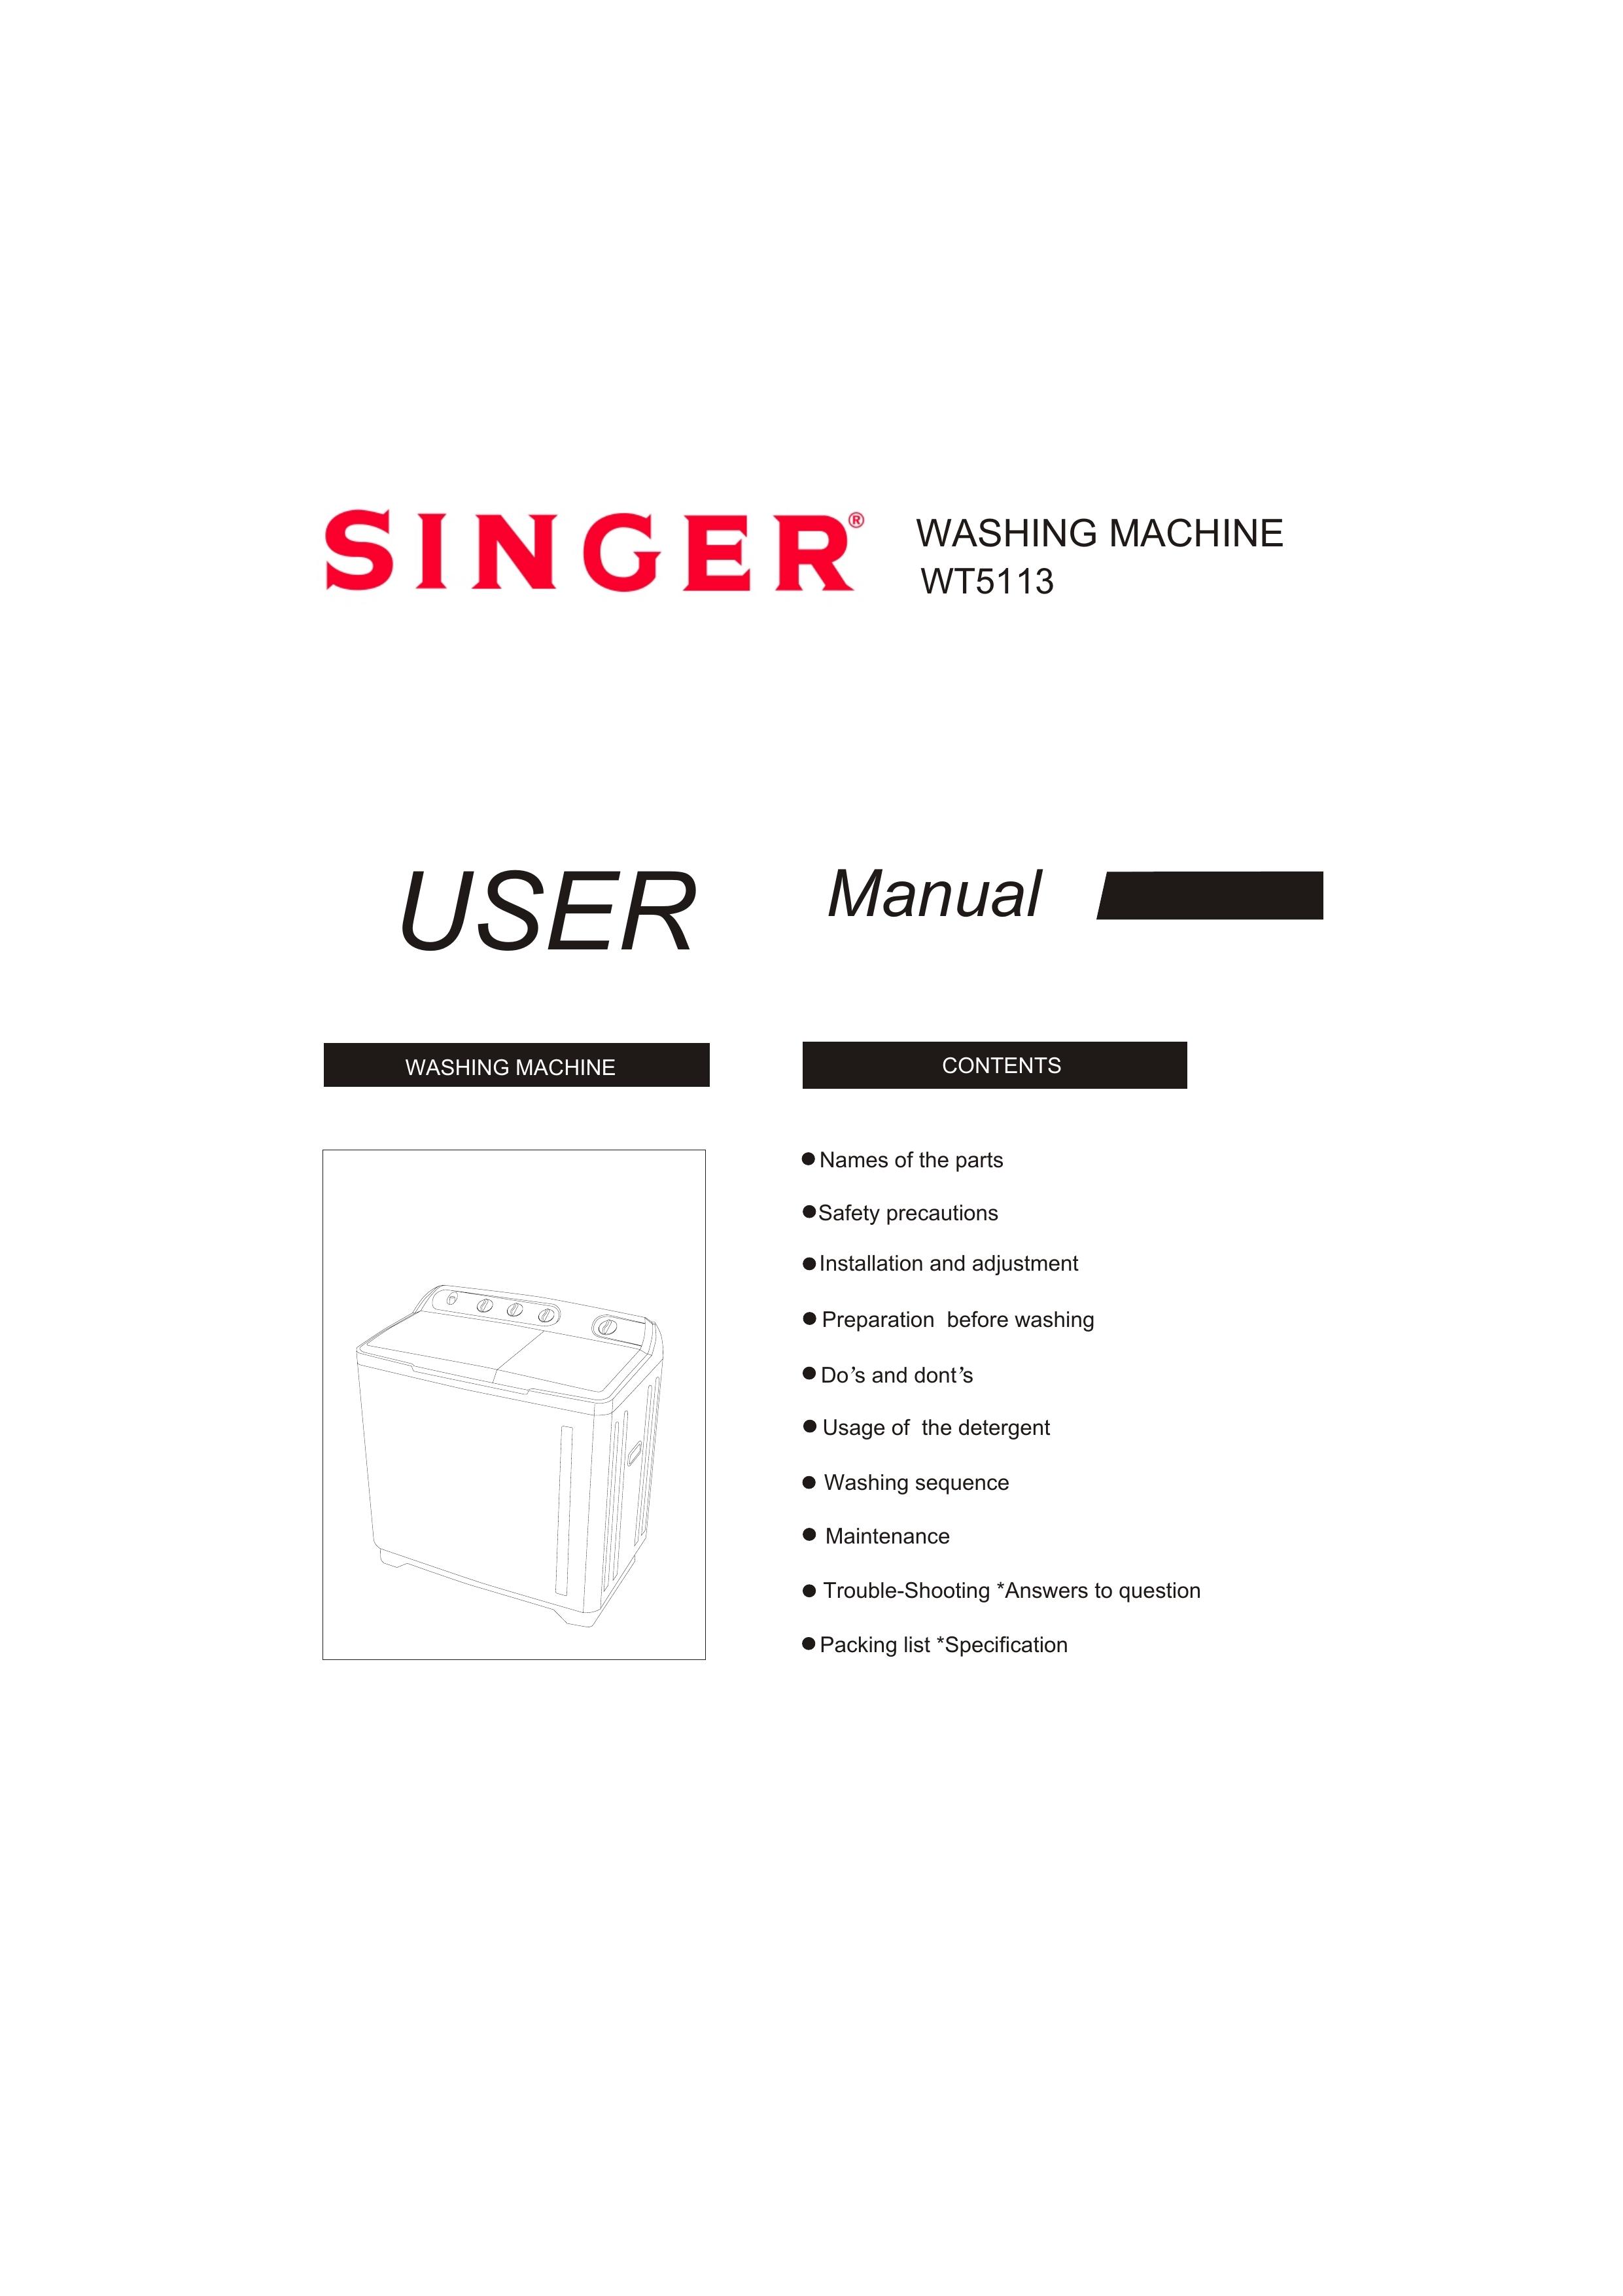 Singer WT5113 Washer/Dryer User Manual